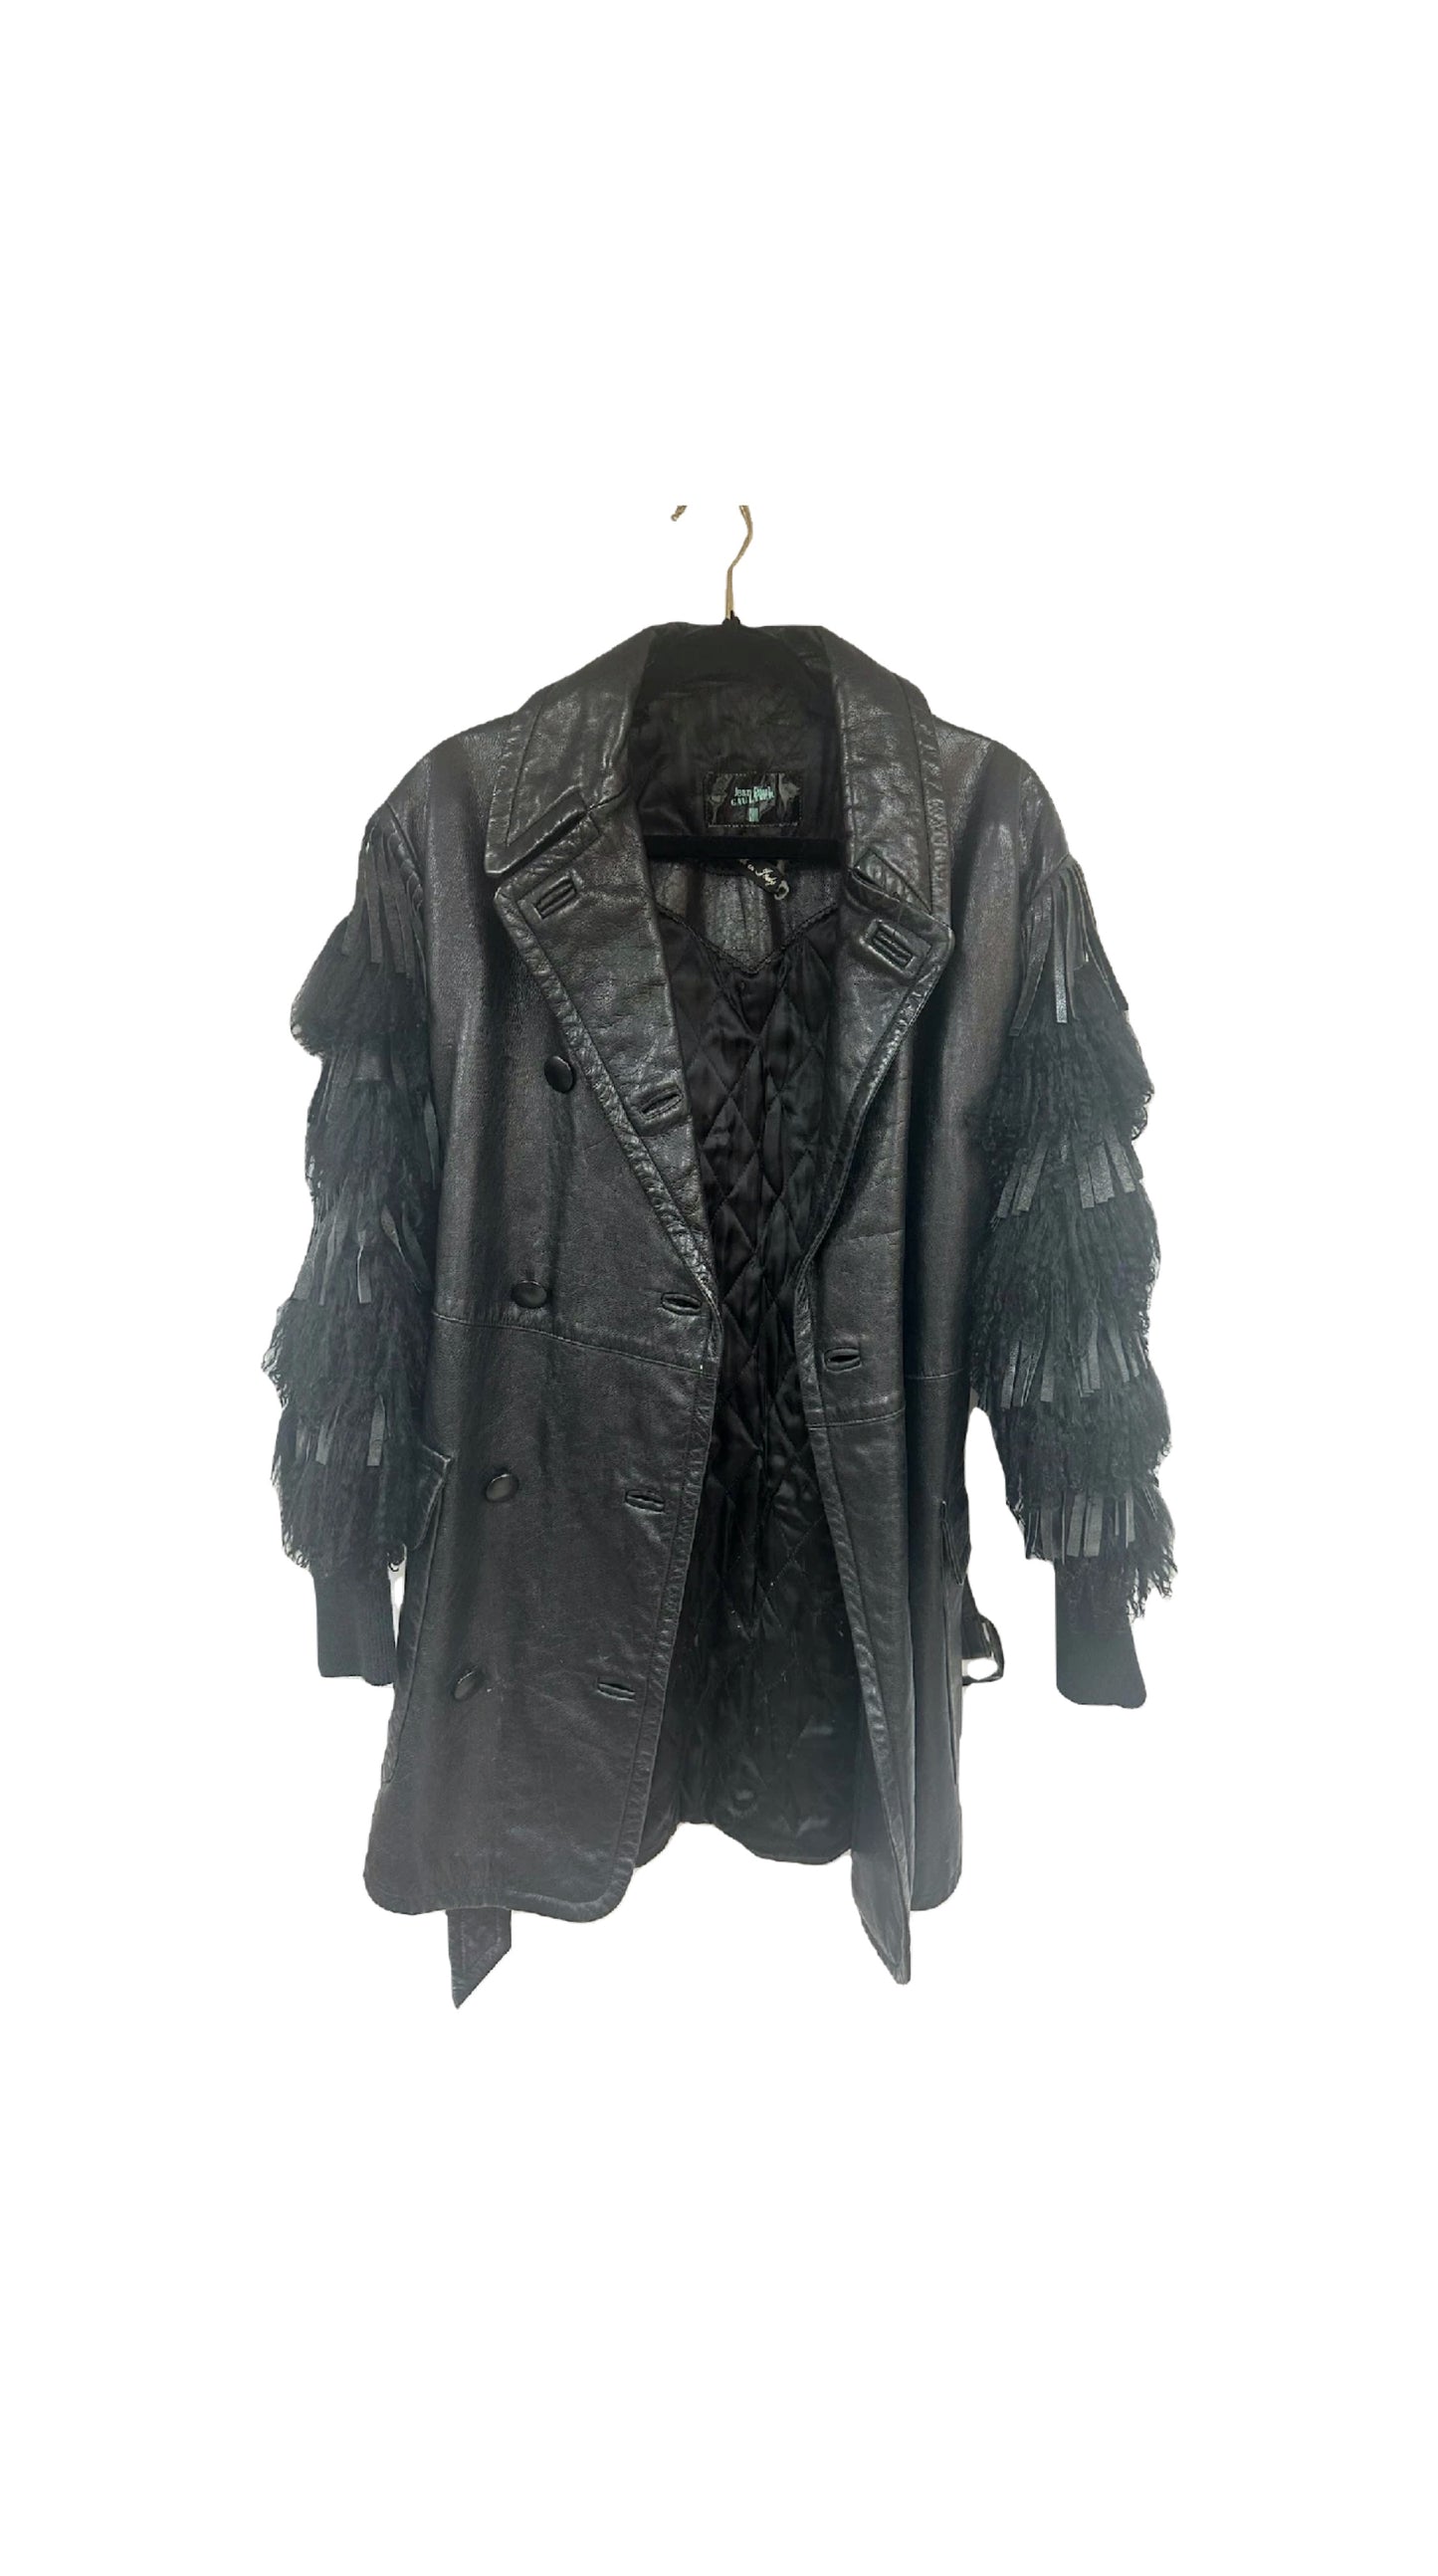 JEAN PAUL GAULTIER Cuir Long Leather Jacket w/ Fringe/Fur Sleeves